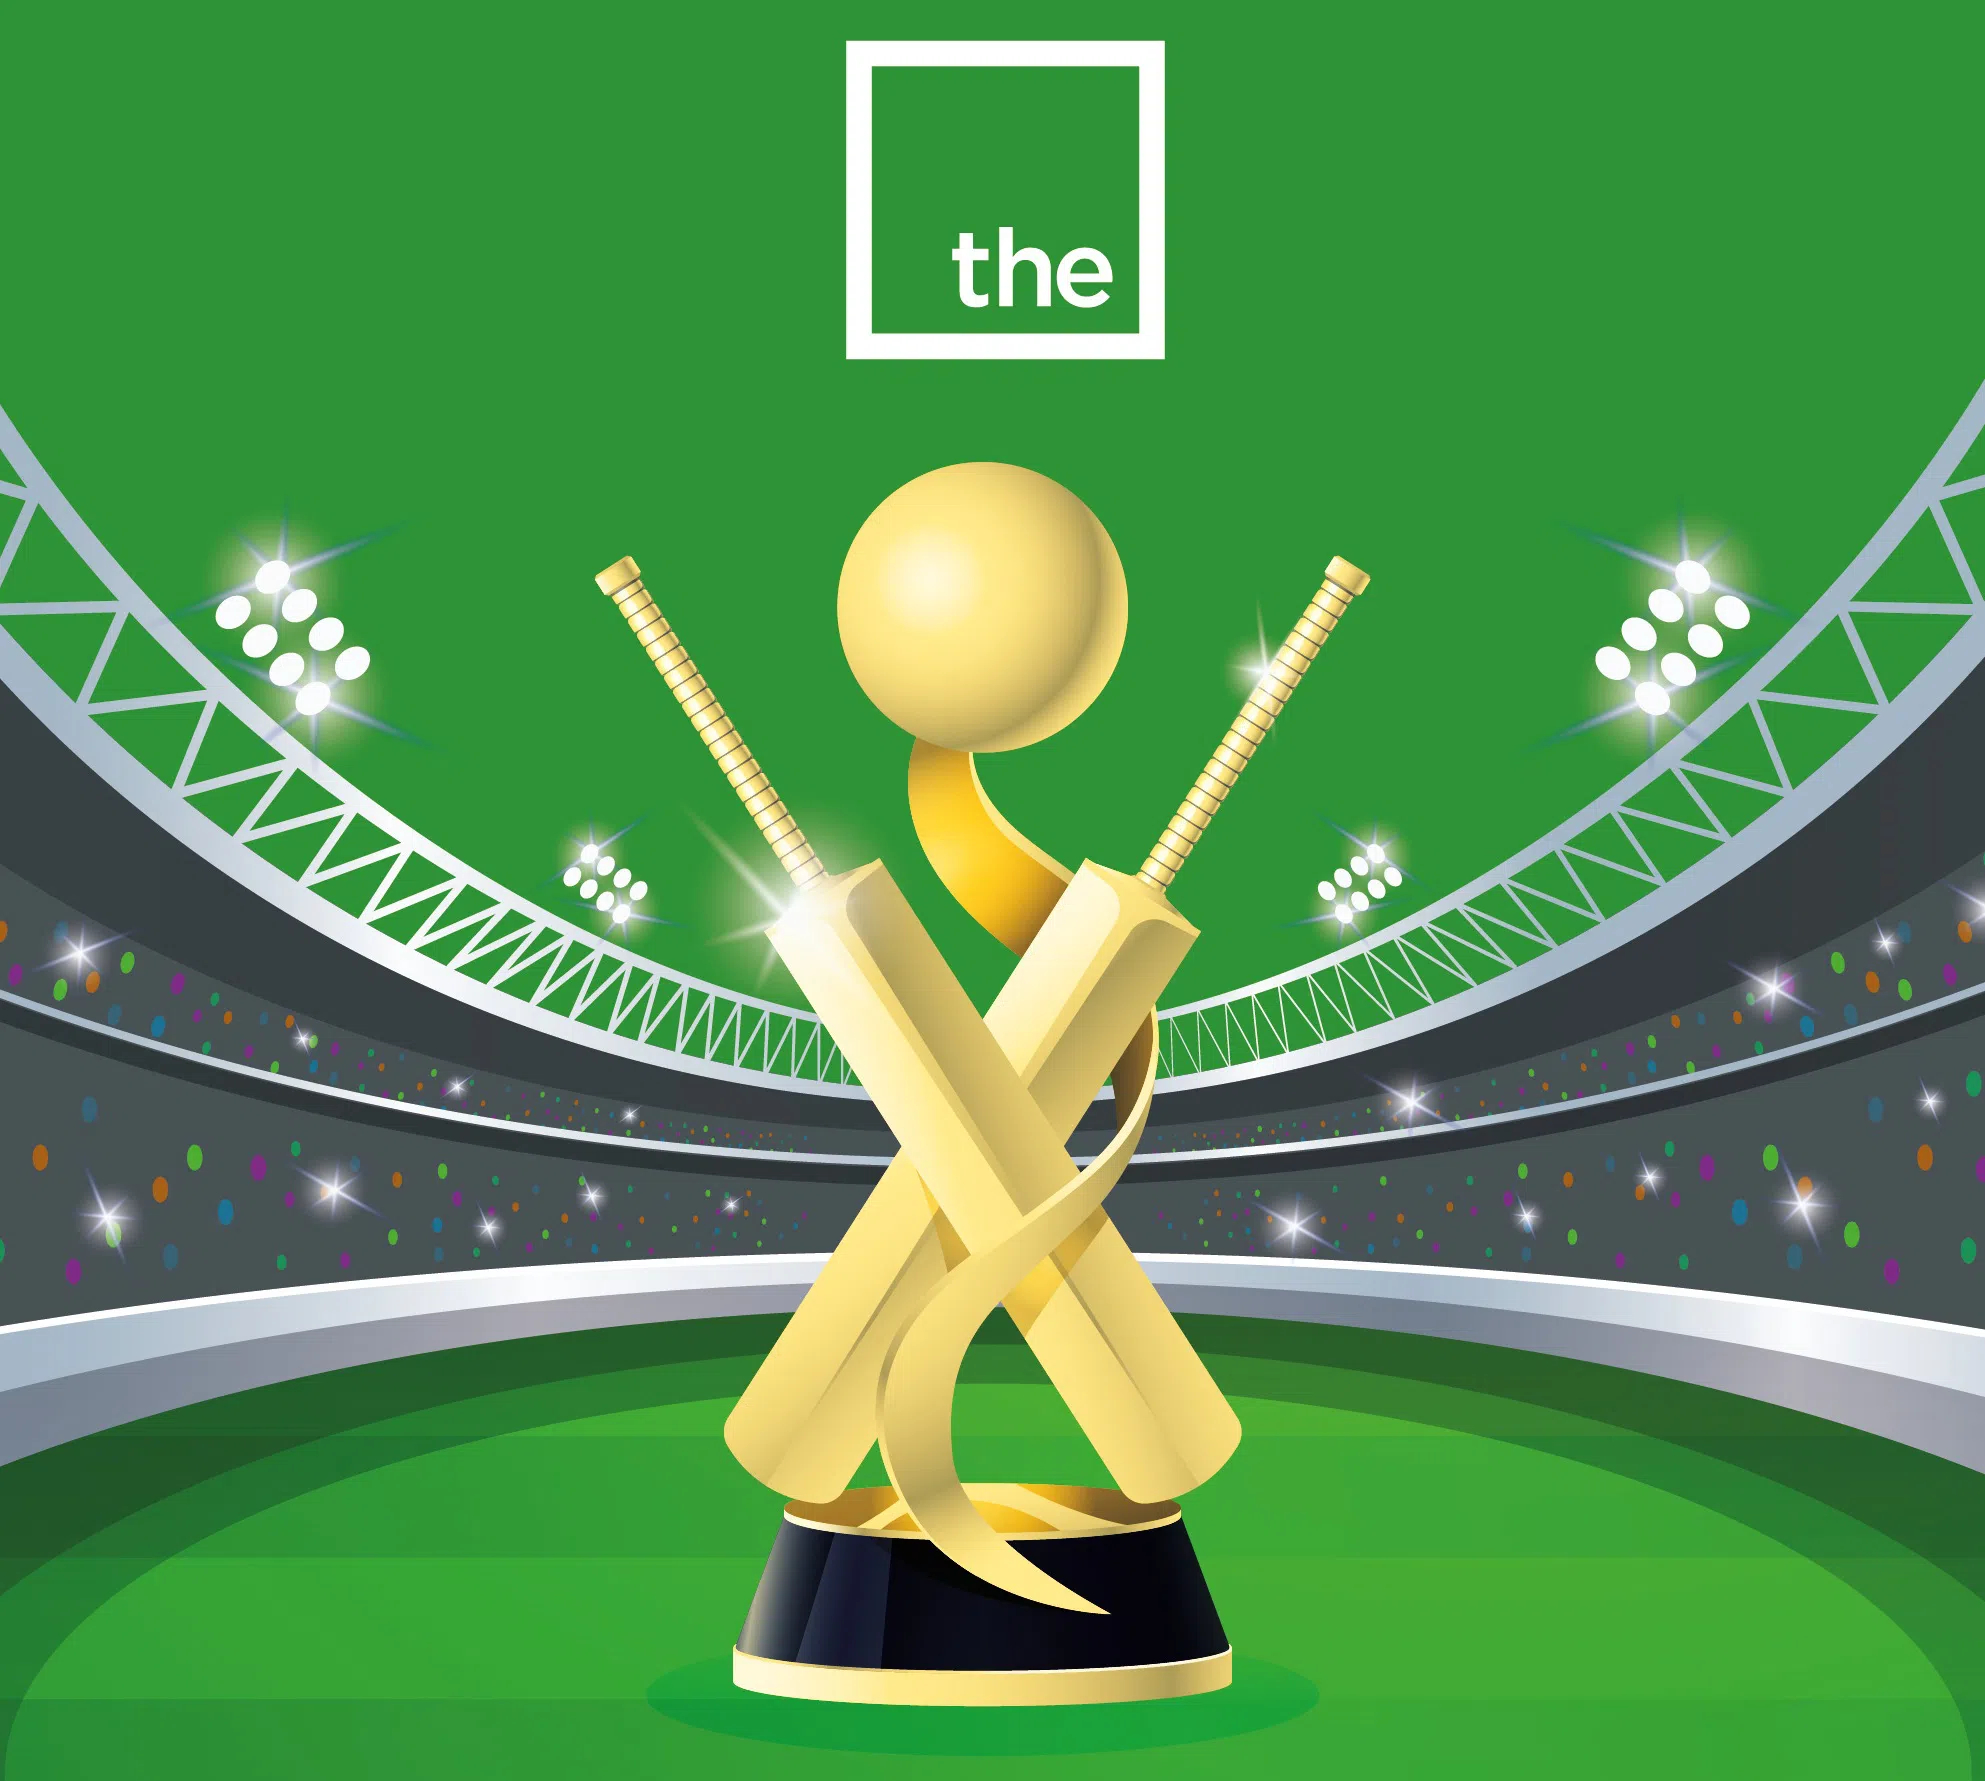 Cricket World Cup 2019 Deals at Thesqua.re